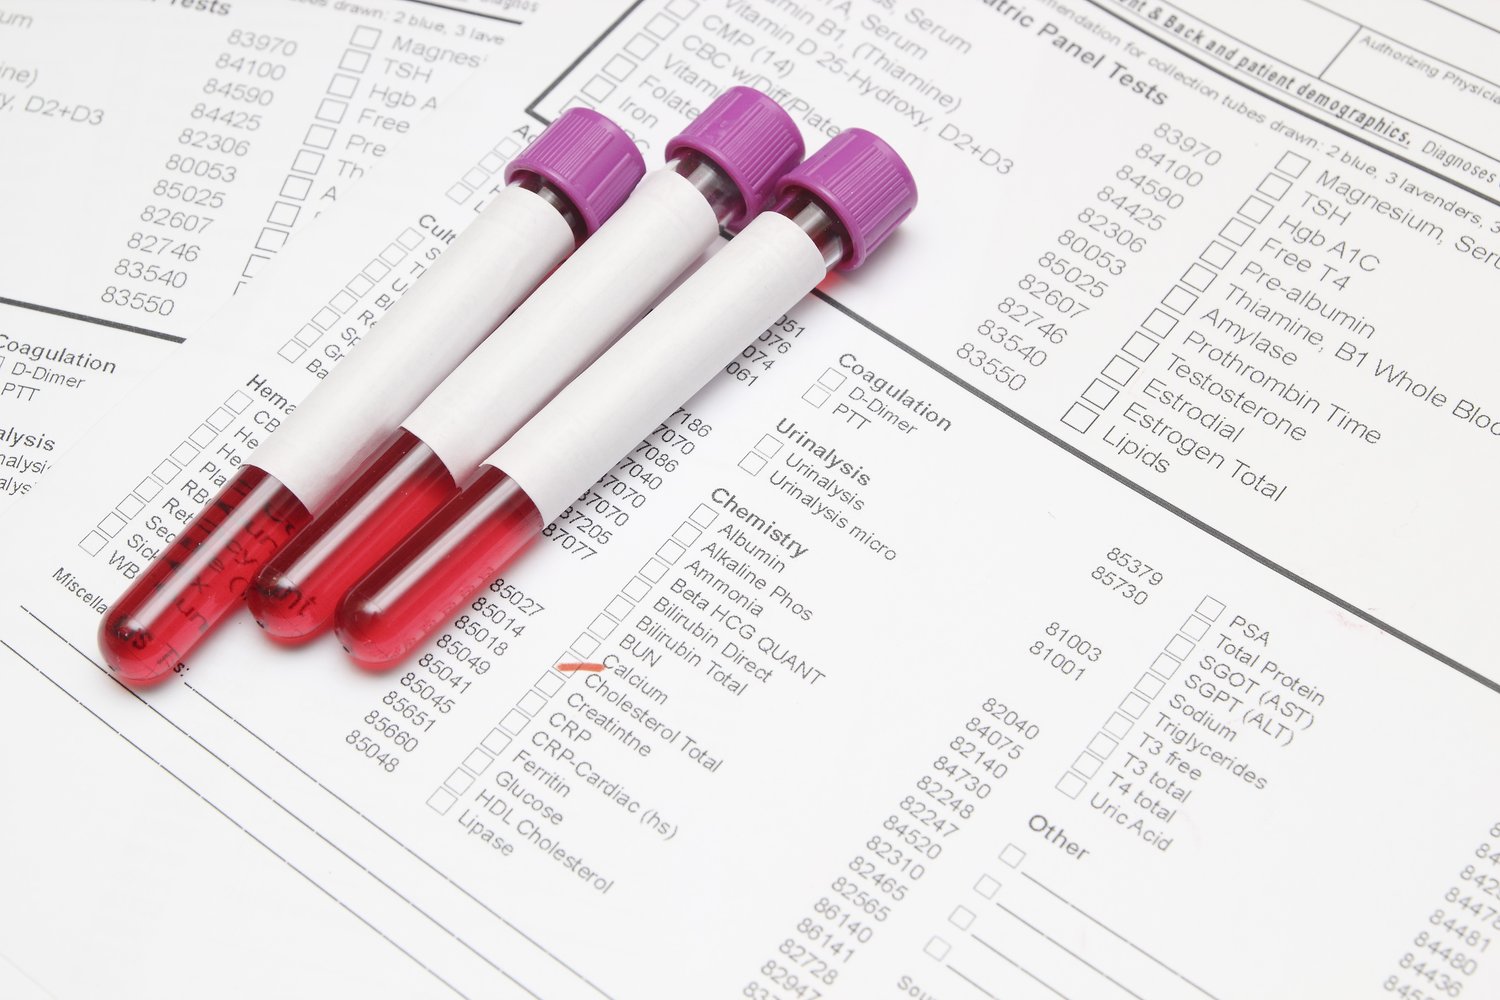 14NOV19 Blood sample stock image